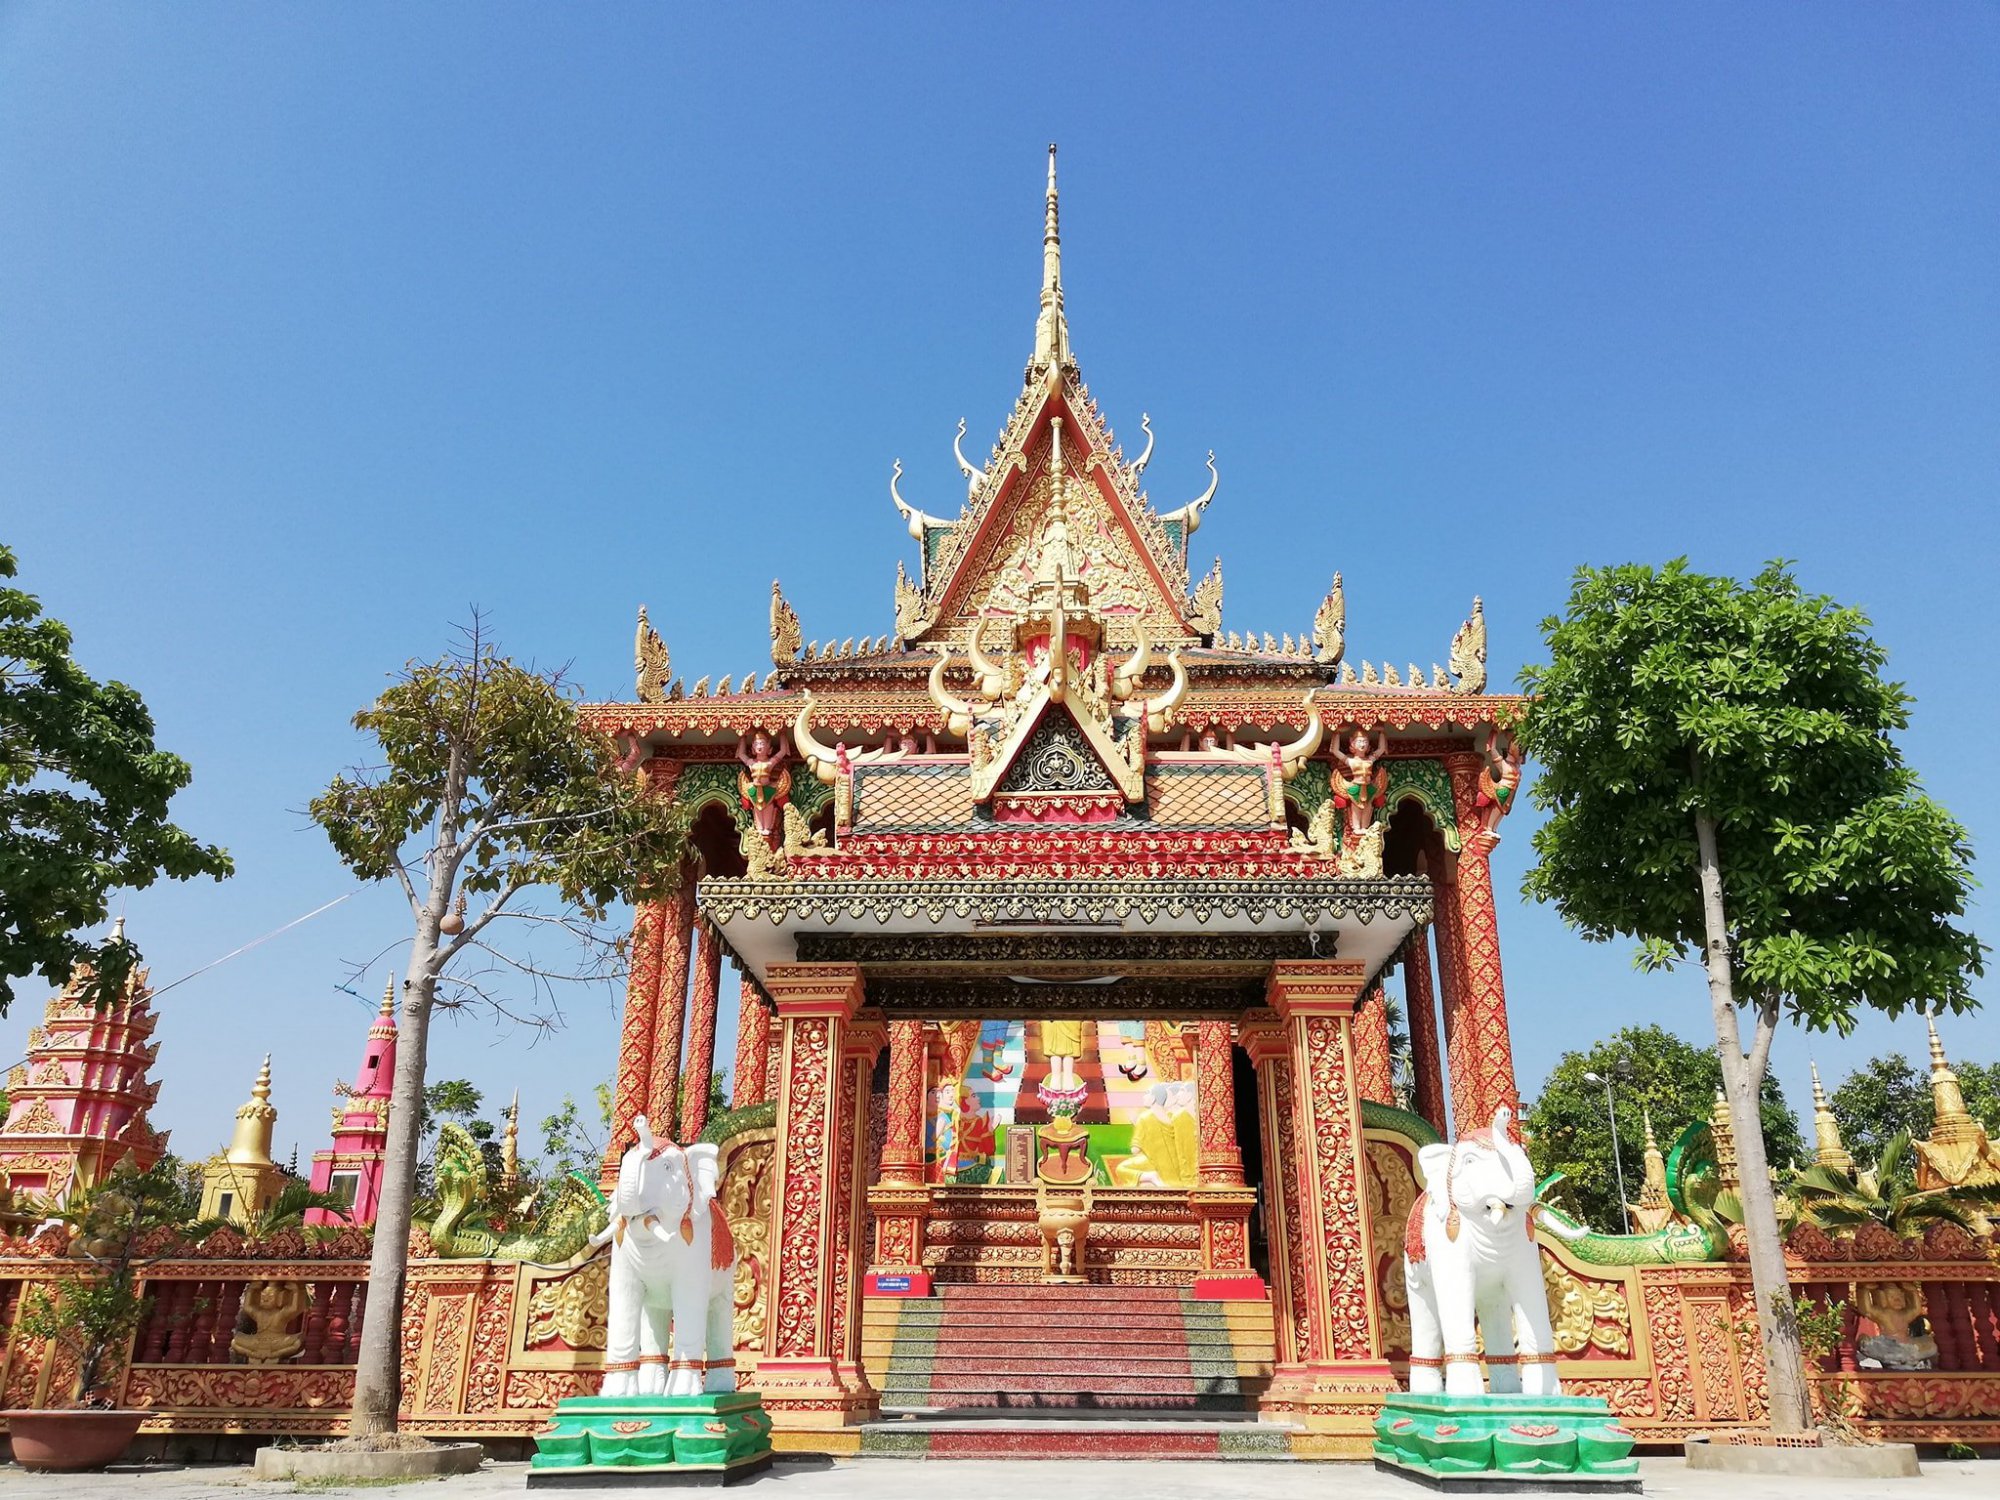 Presbytery of the pagoda